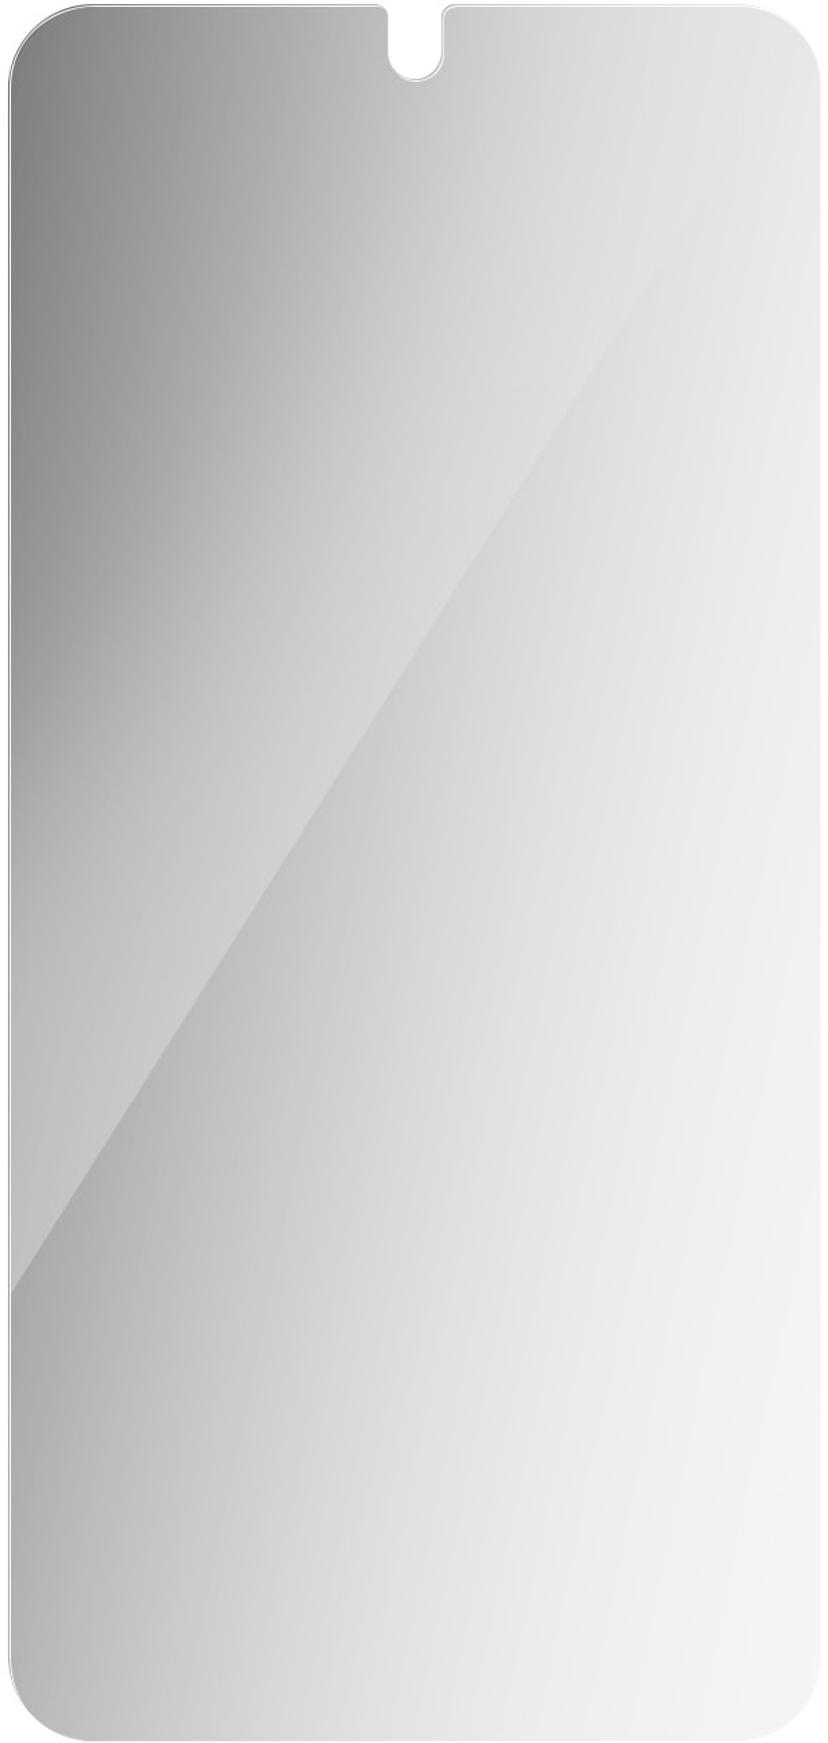 Panzerglass Ultra-wide Fit Privacy Samsung - Galaxy S24